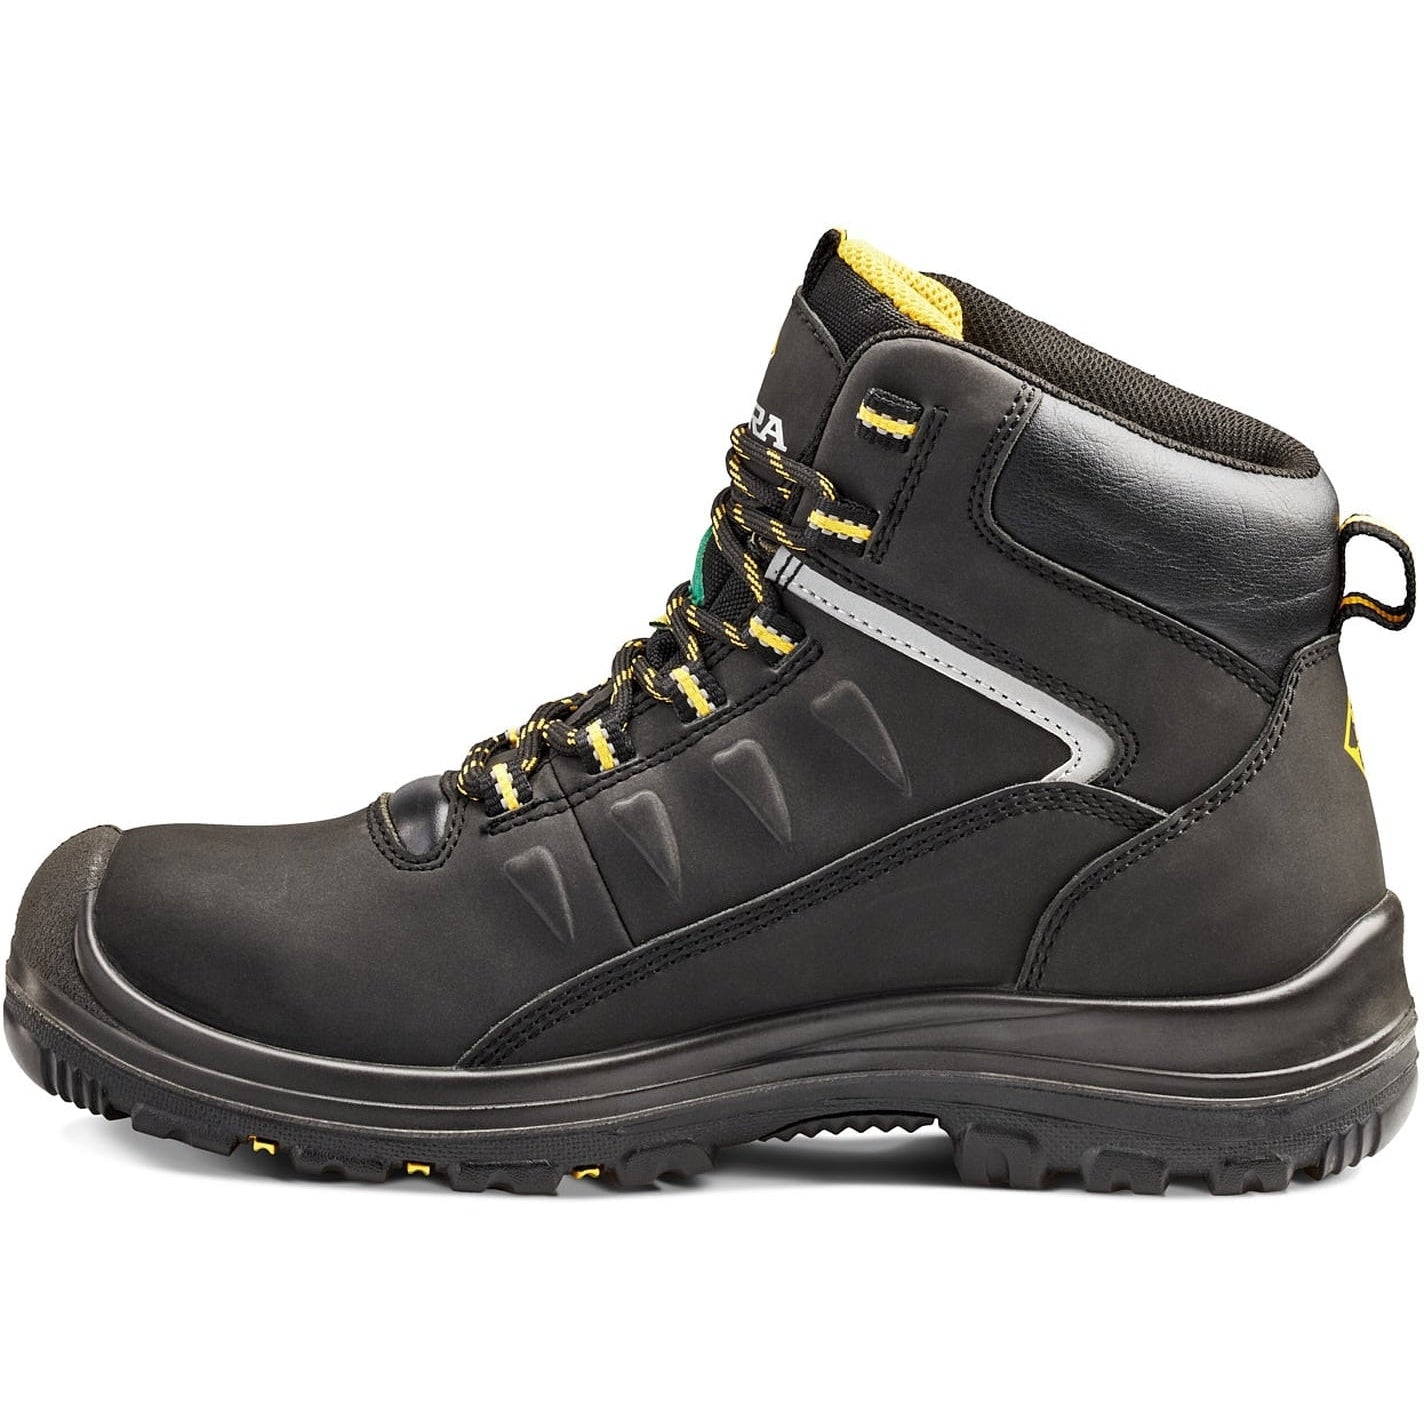 Terra Men's Findlay 6" Comp Toe WP Safety Work Boot -Black- R5205B  - Overlook Boots